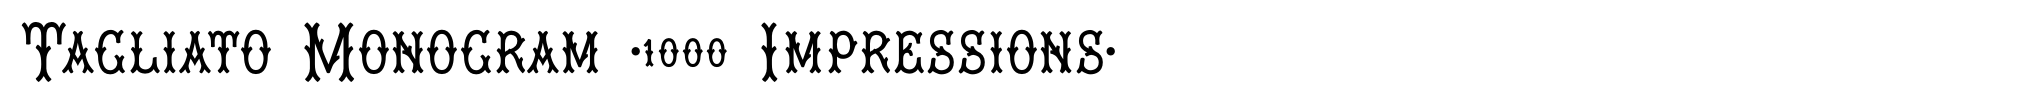 Tagliato Monogram (1000 Impressions) image